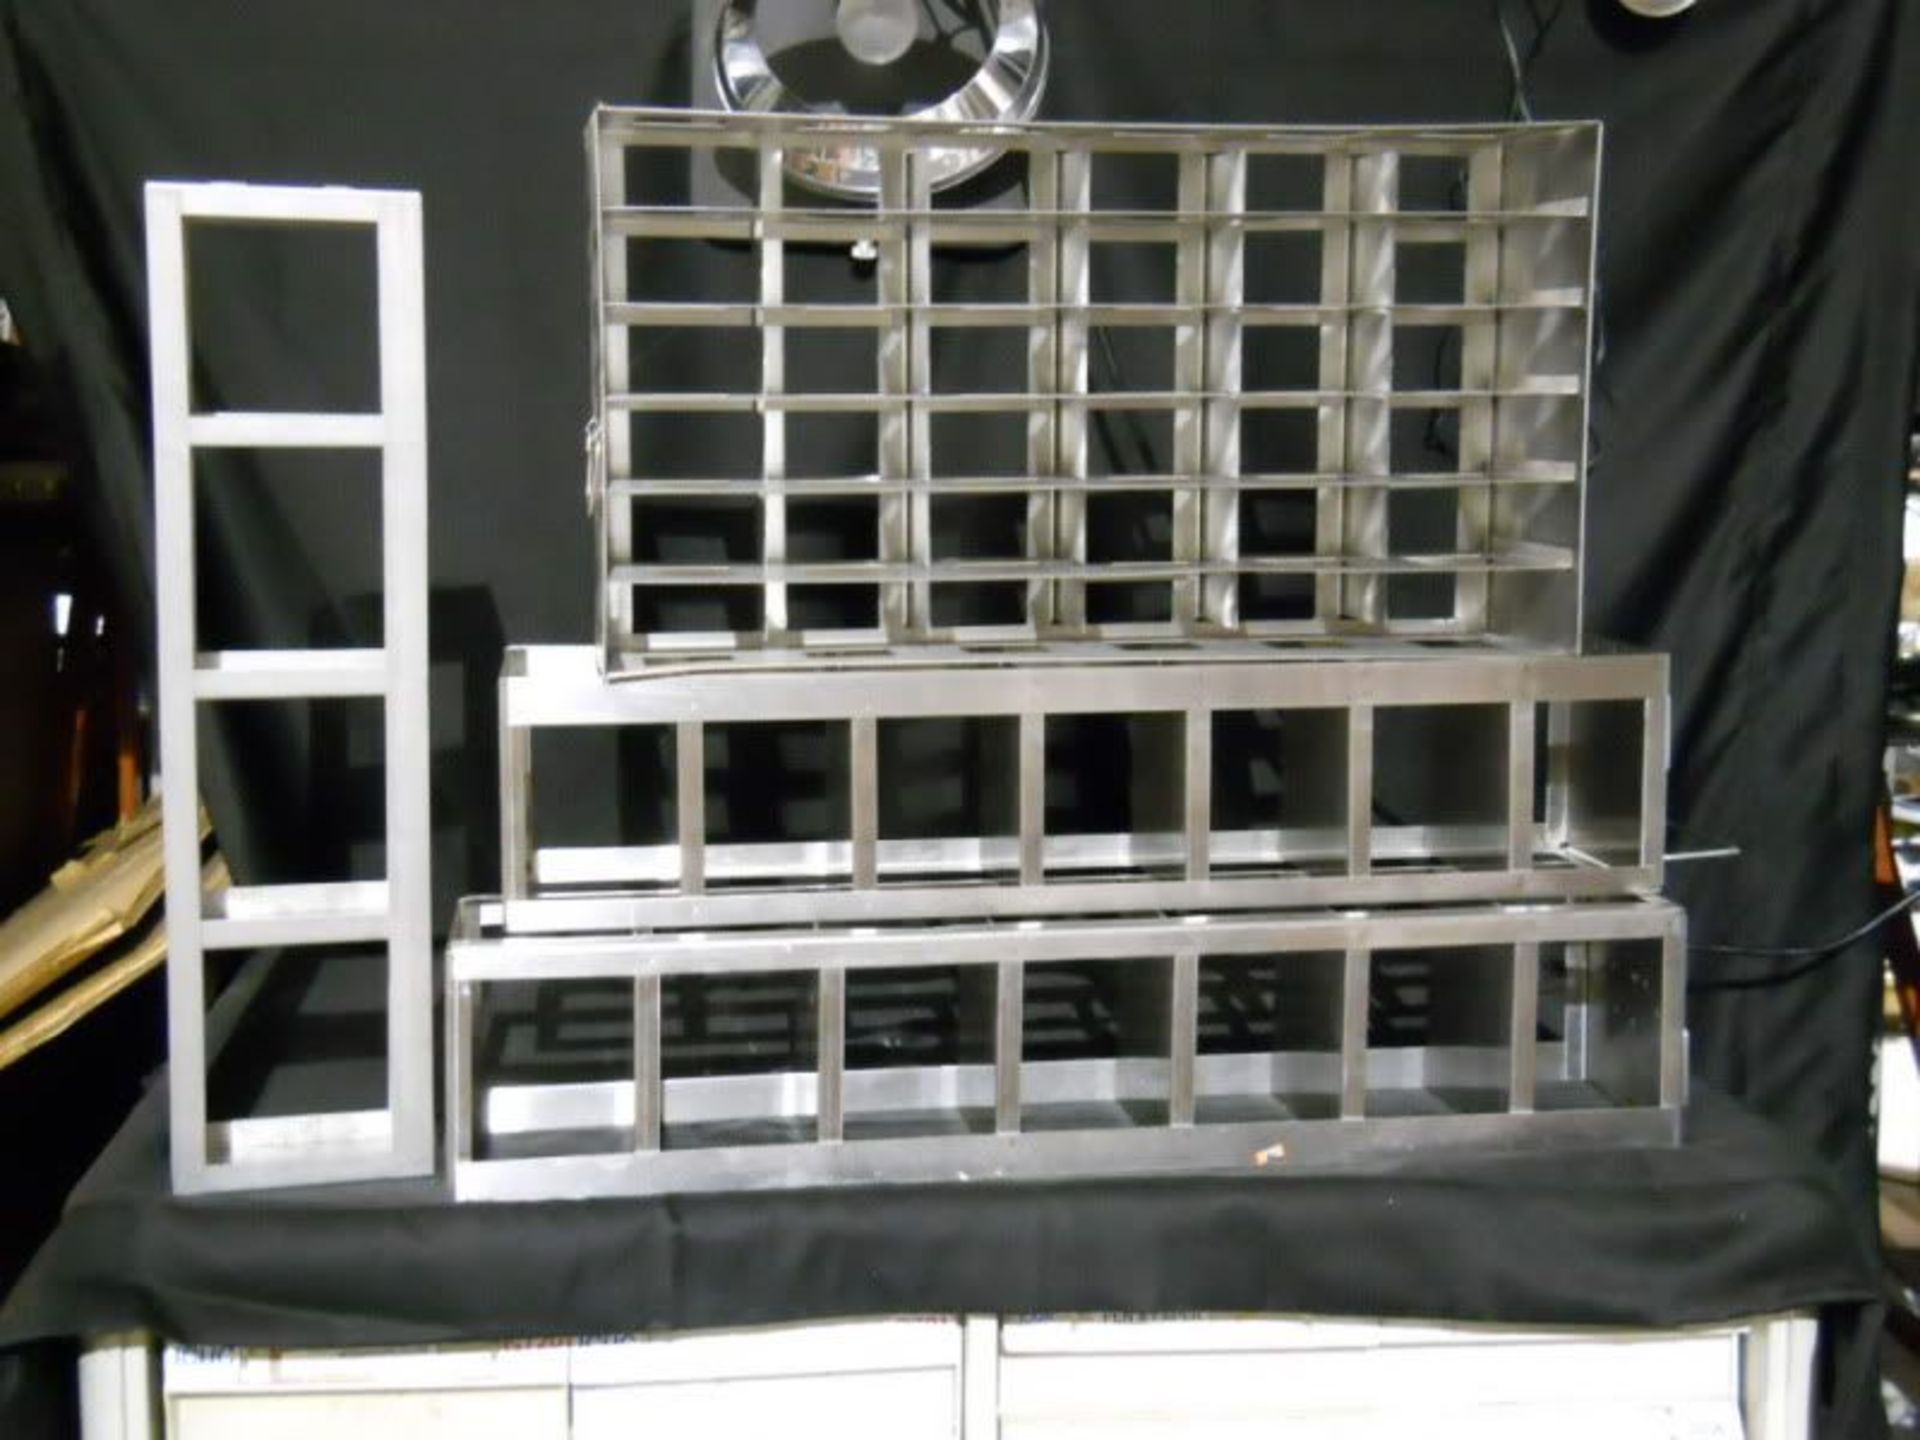 Lot of 4 Assorted Cryo Ultralow freezer Stainless Steel Cryogenic Racks LN2, Qty 1, 220940328366